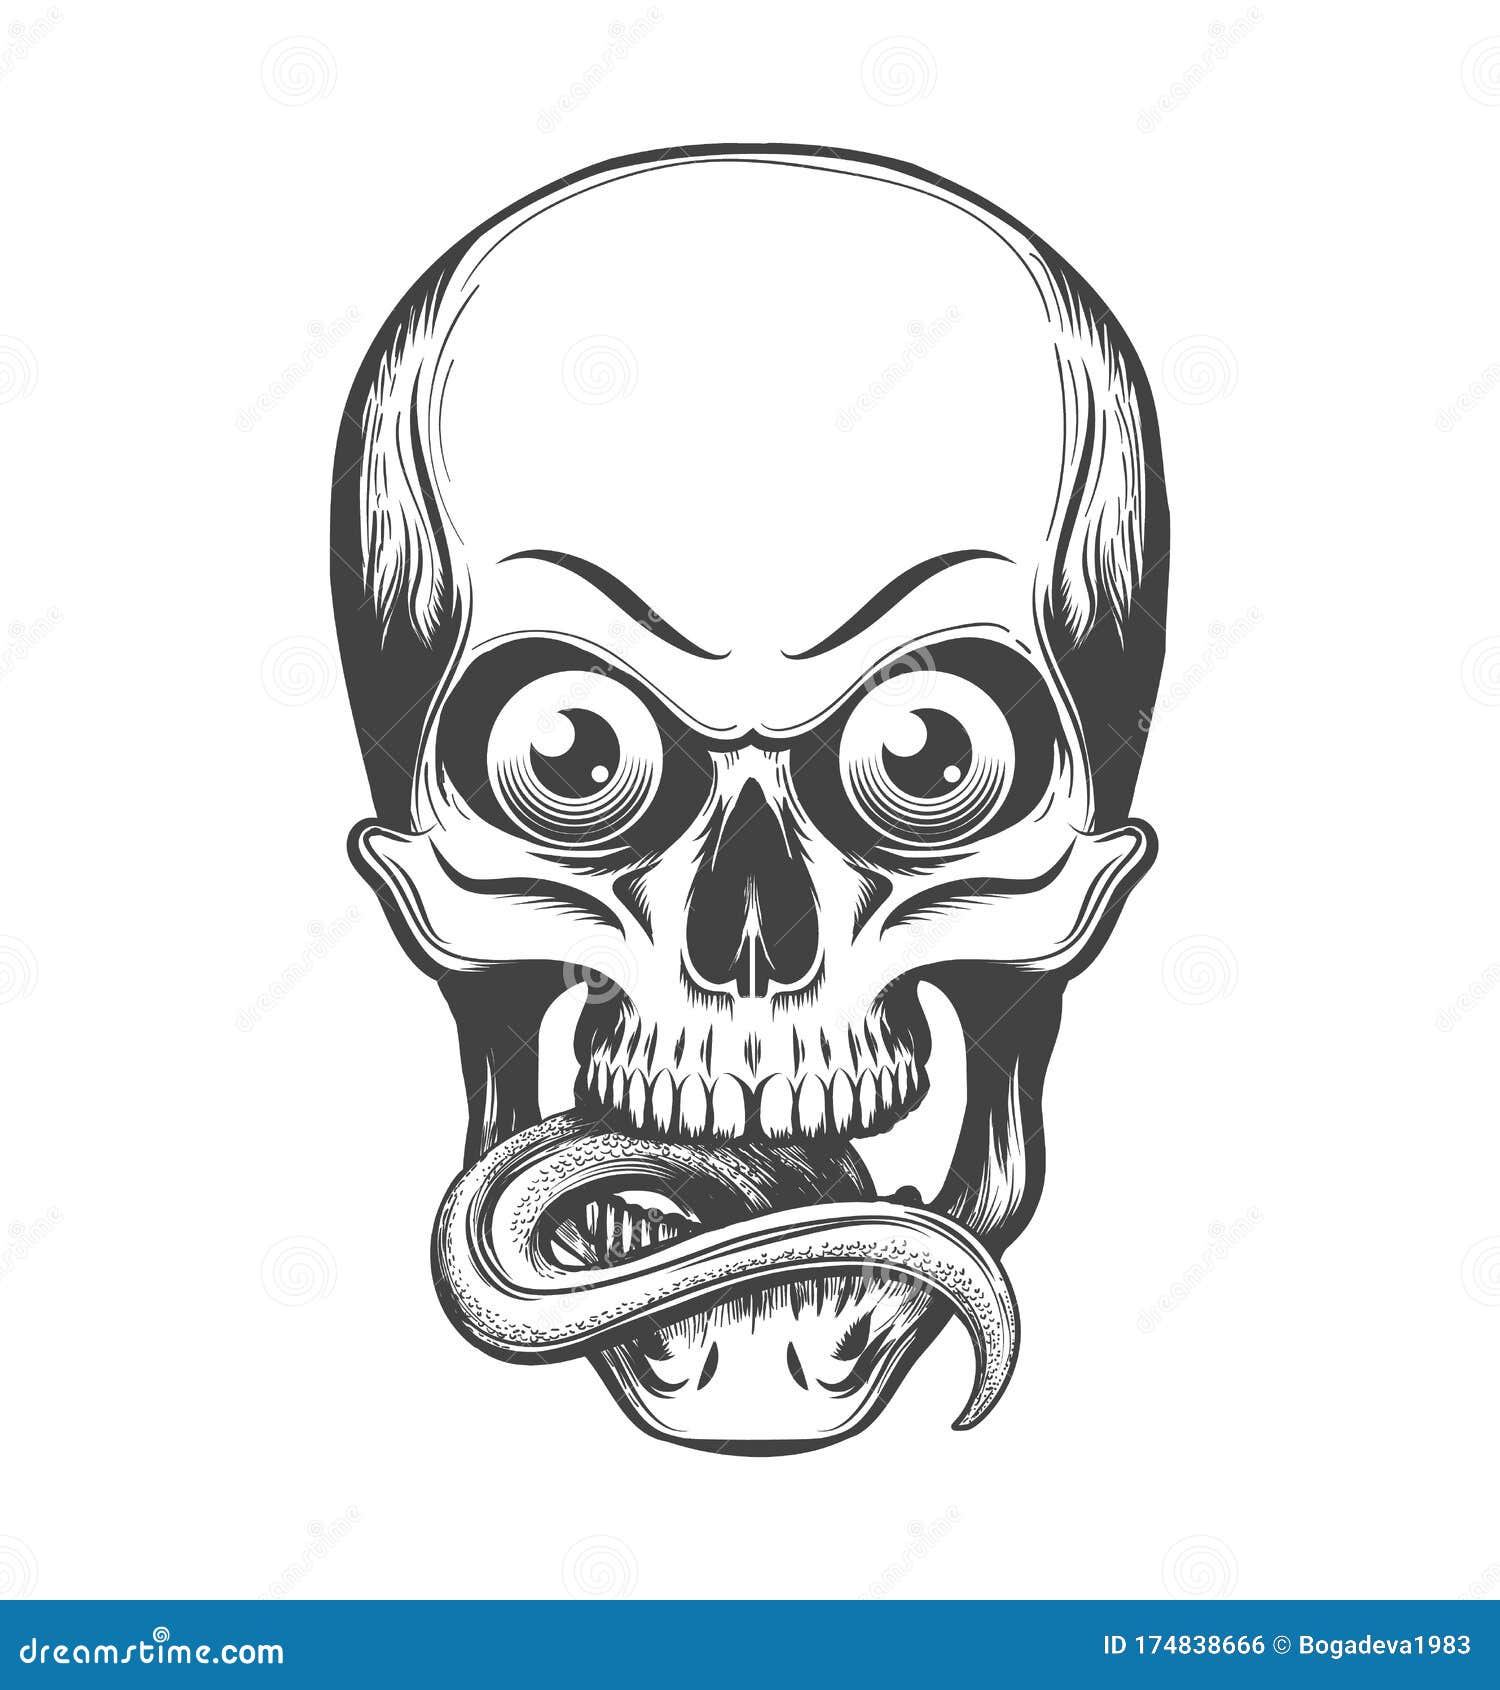 Skull with glowing eyes  hand tattoo  Skull tattoo Hand tattoos Skeleton  tattoos